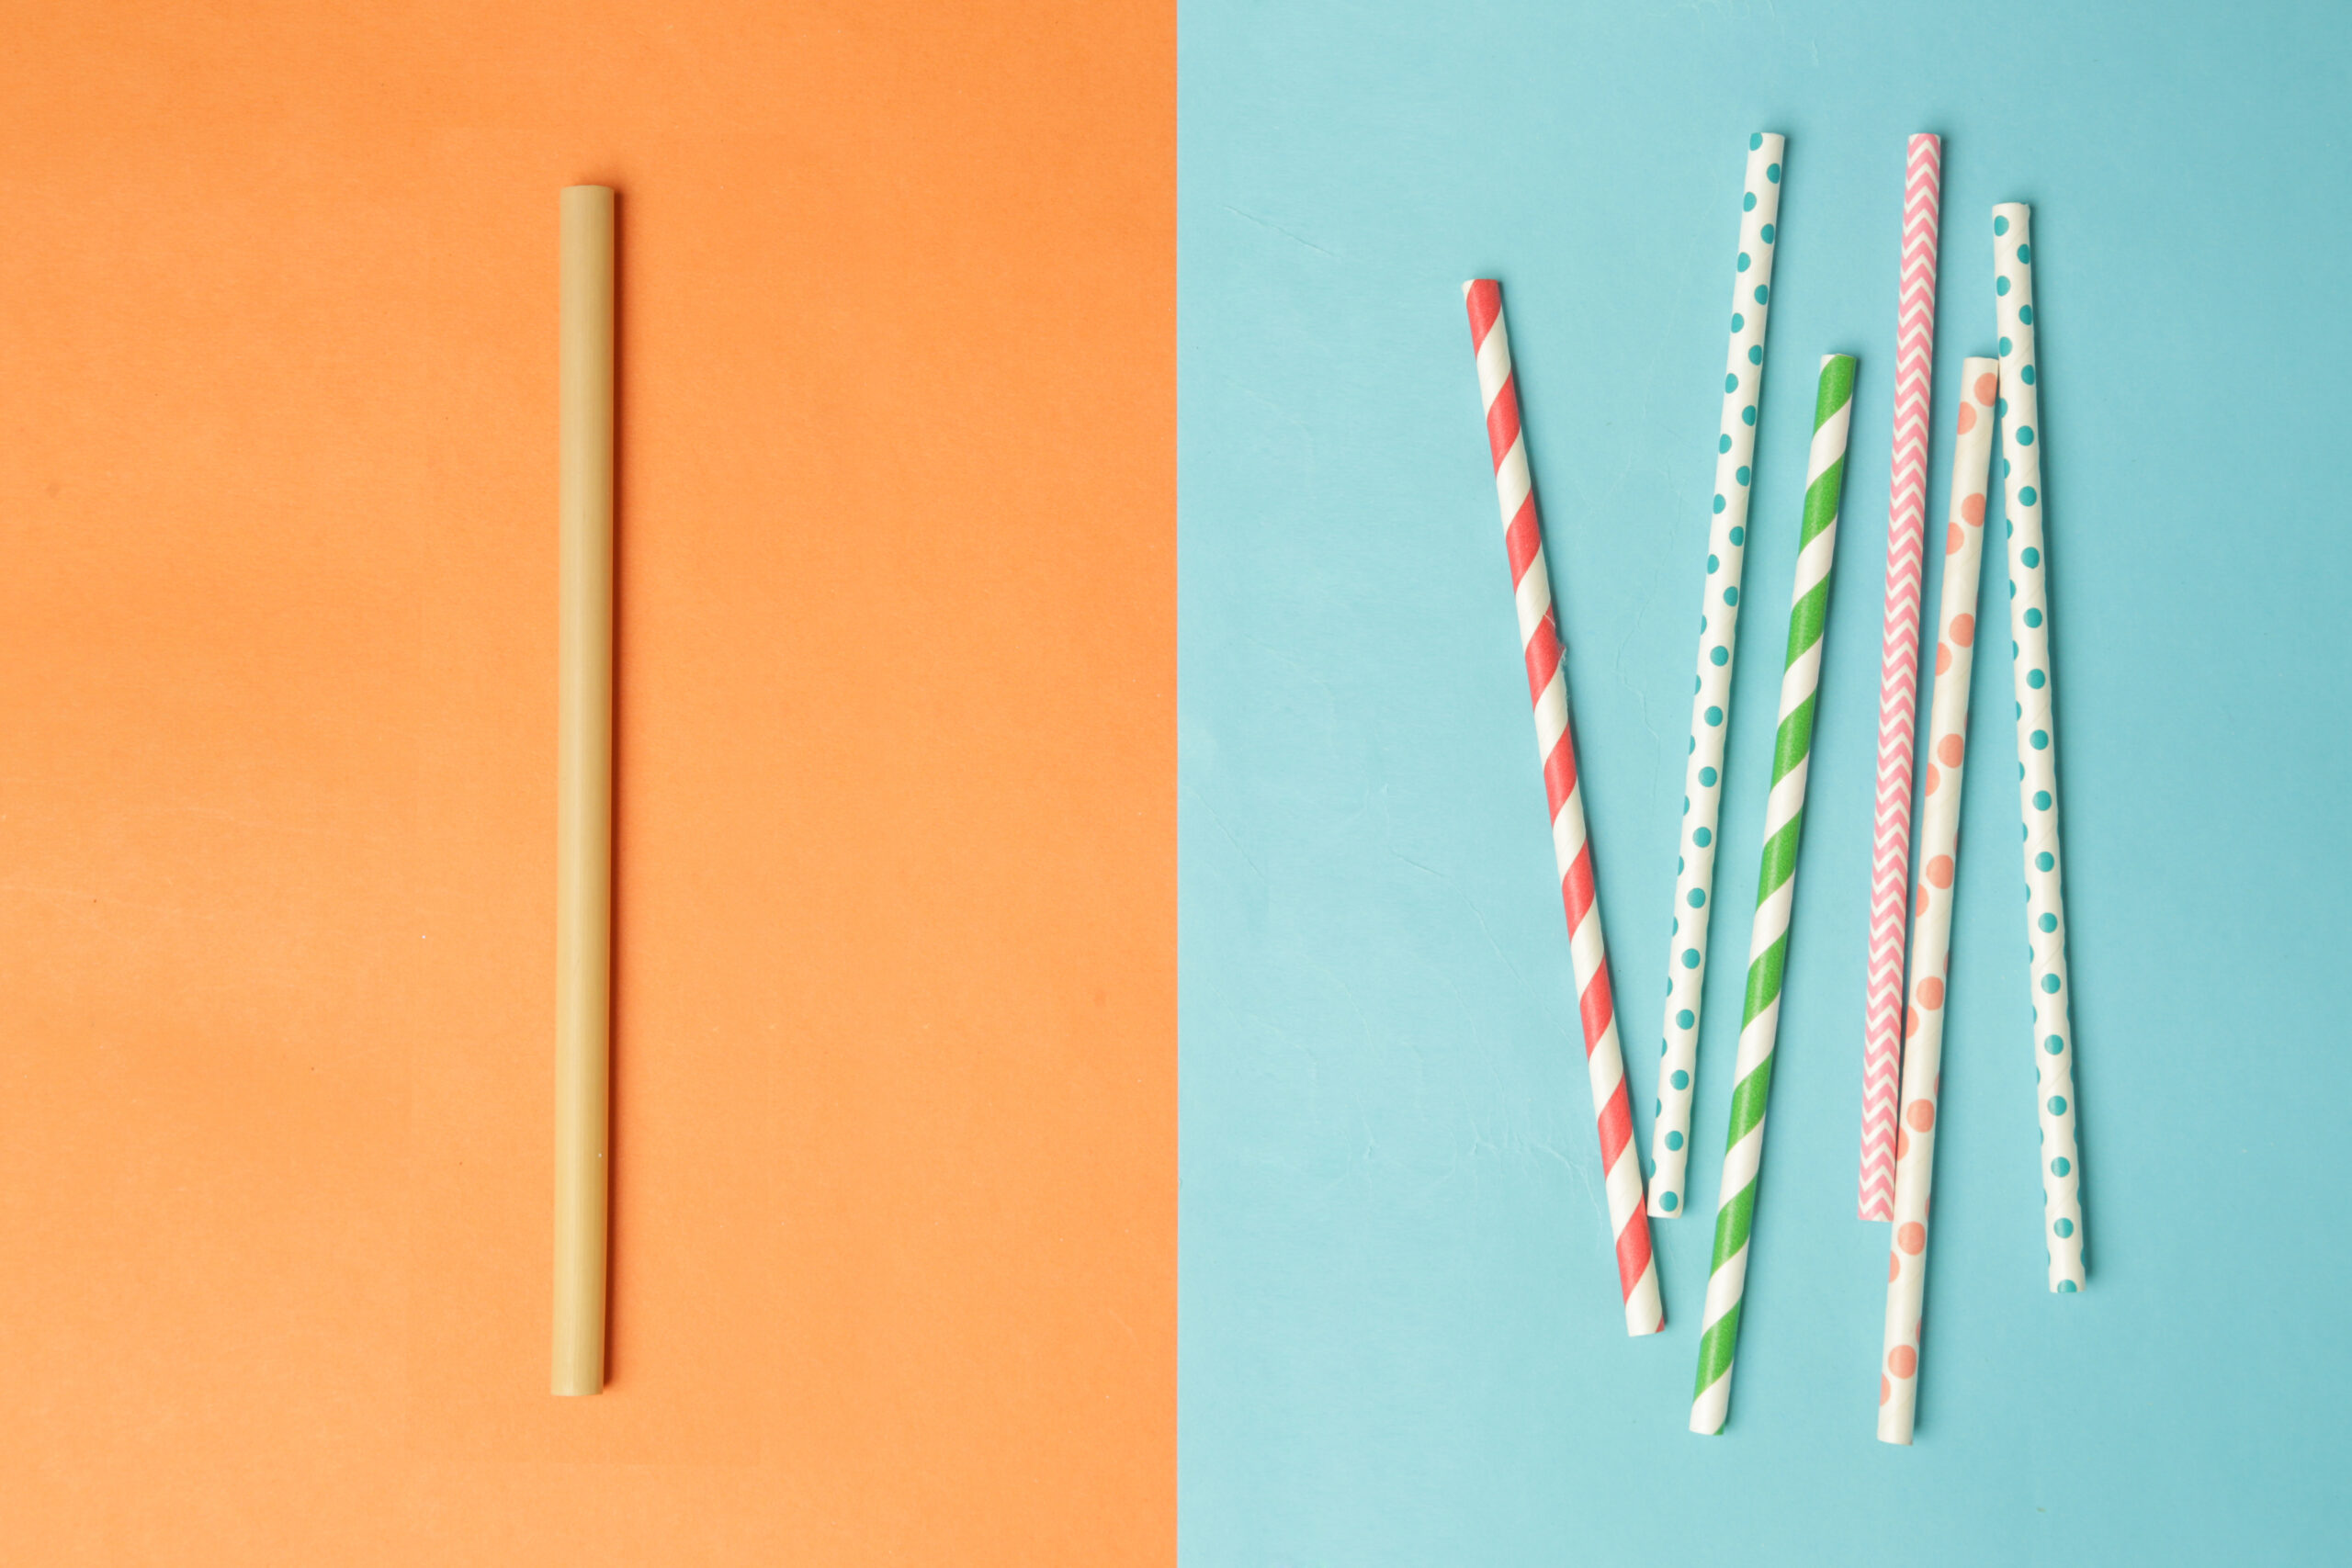 Reusable,Bamboo,Straws,As,An,Alternative,For,Single-use,Plastic,Straws